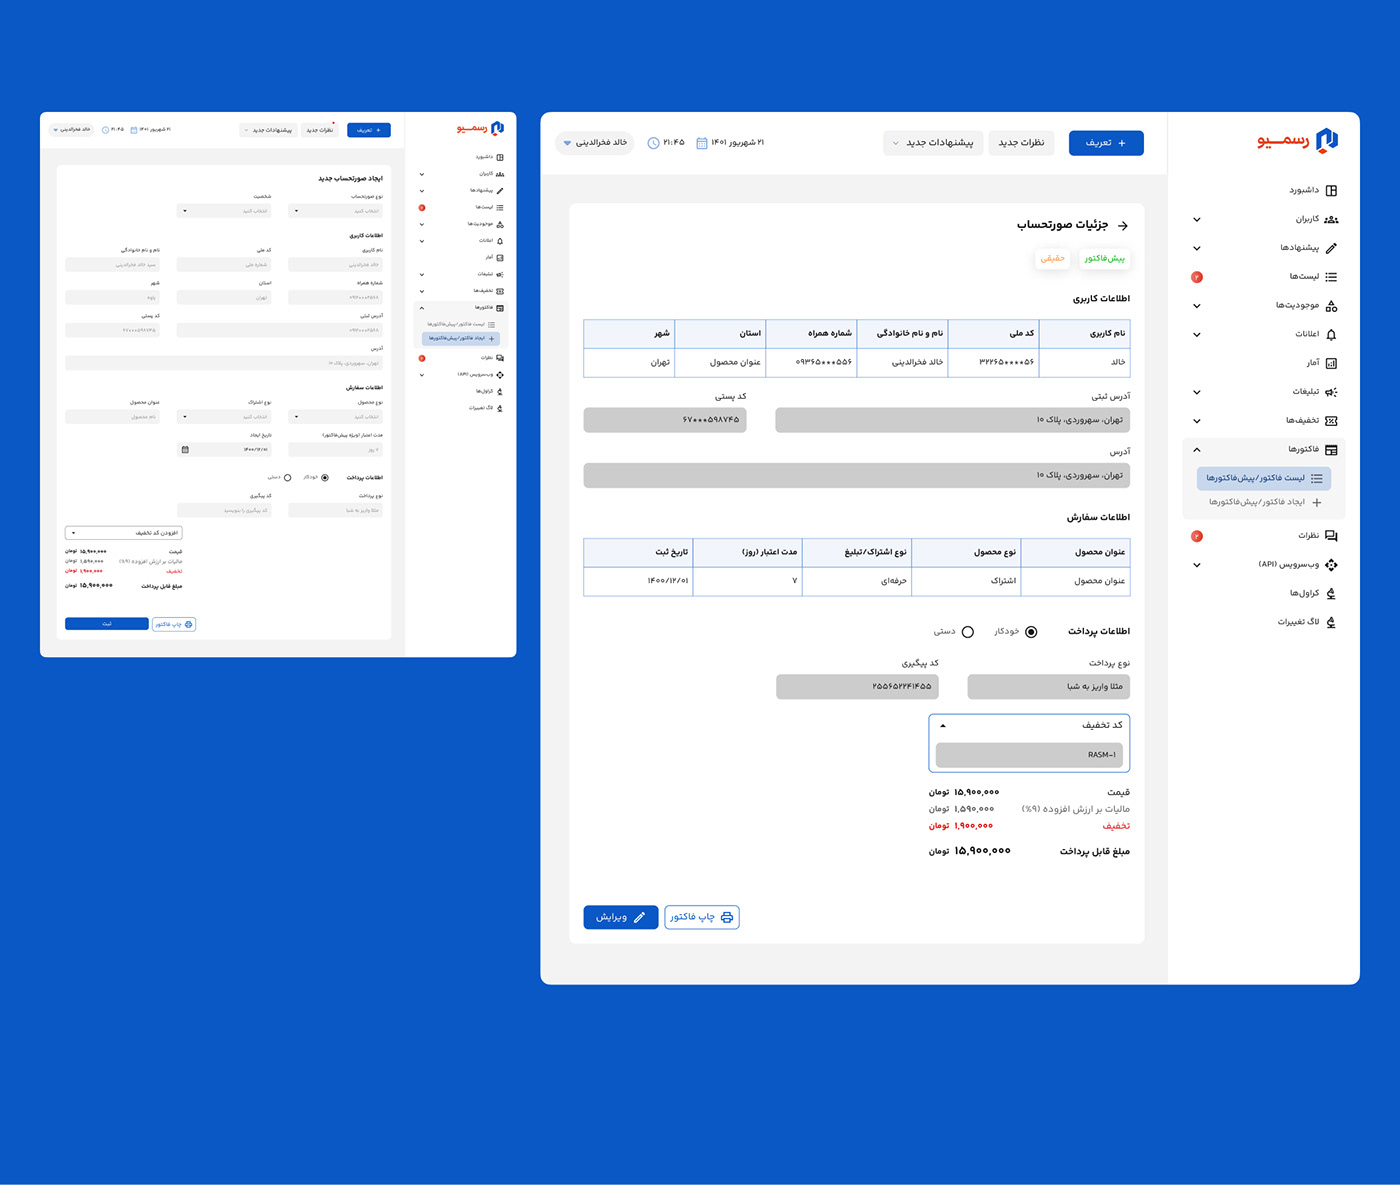 Dashboard & Admin Panel UI Design - Rasmio